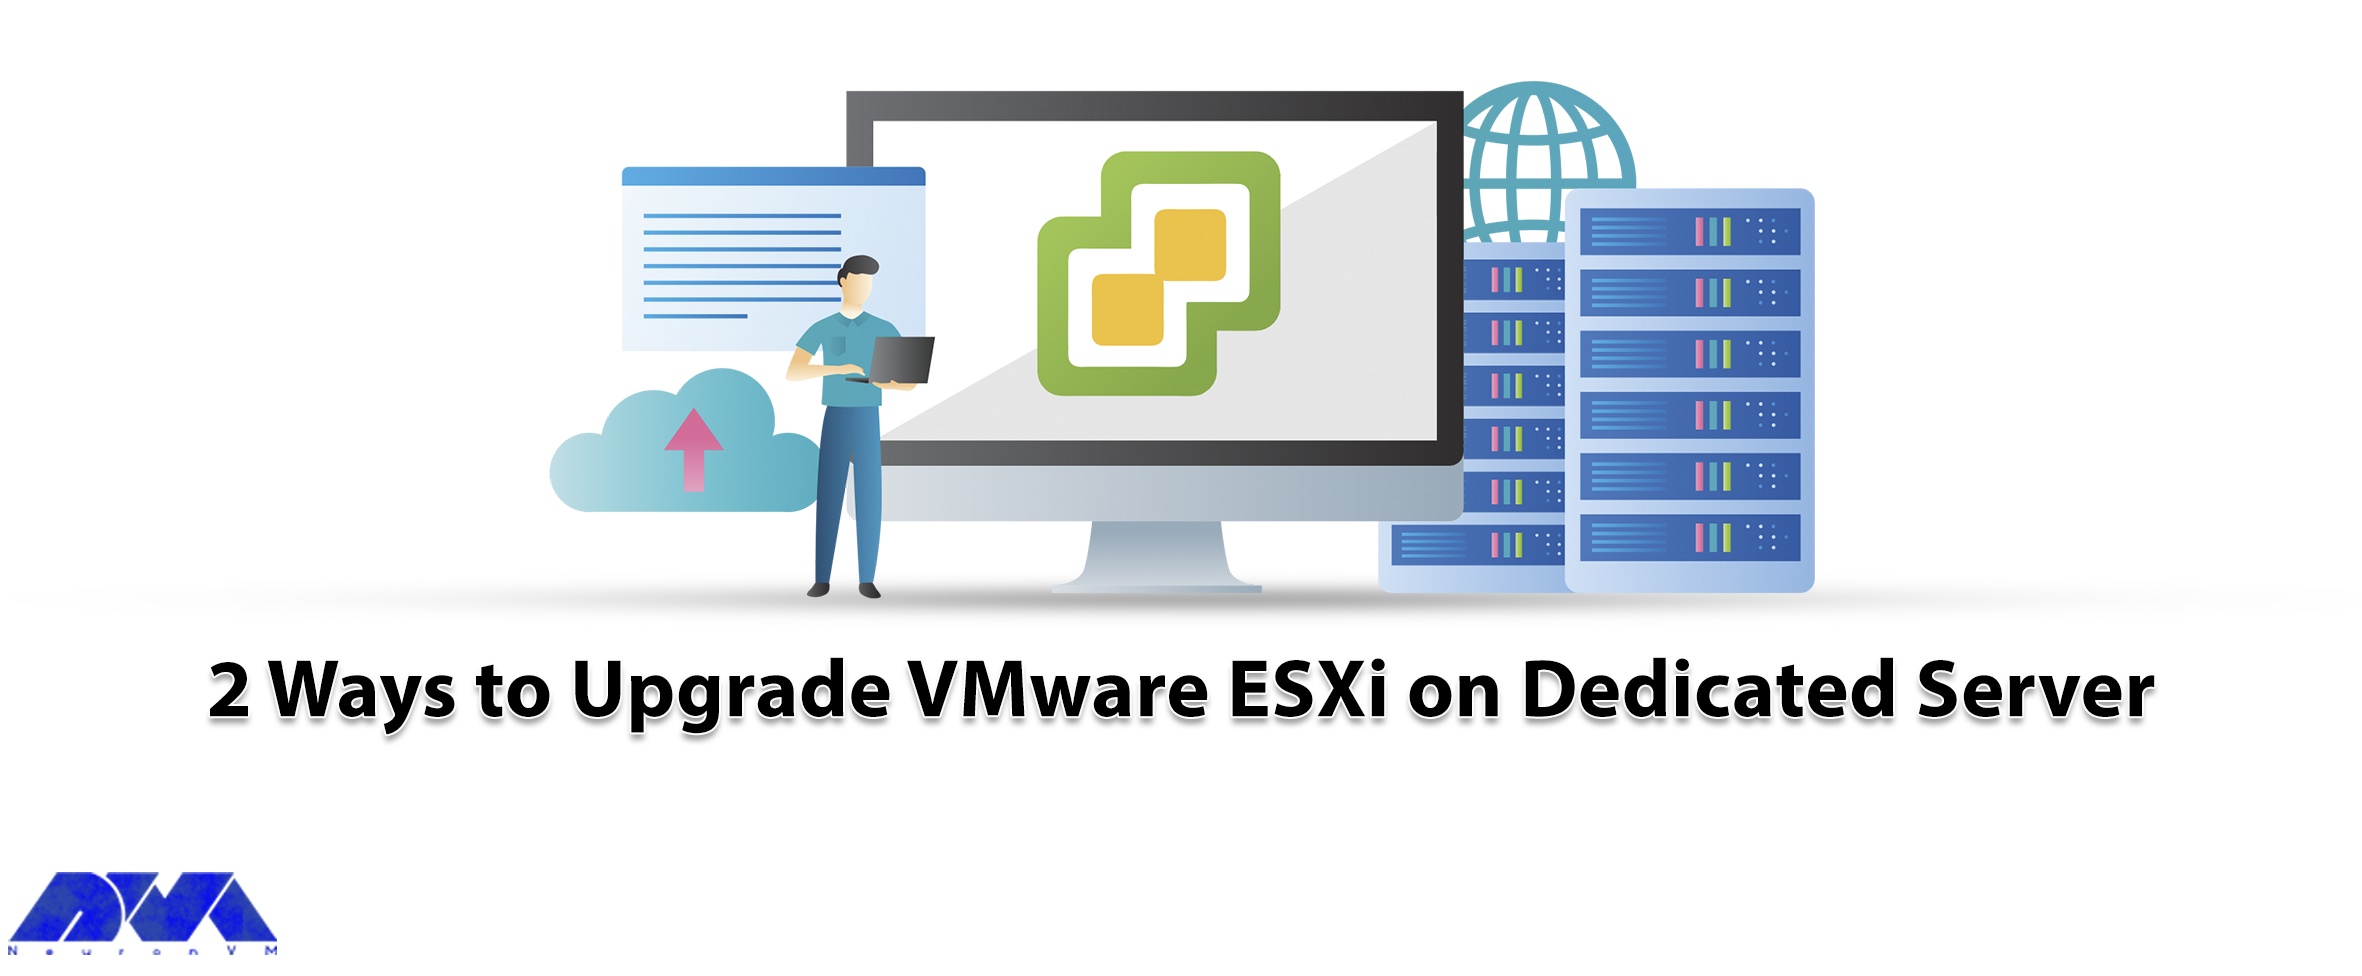 2 Ways to Upgrade VMware ESXi on Dedicated Server